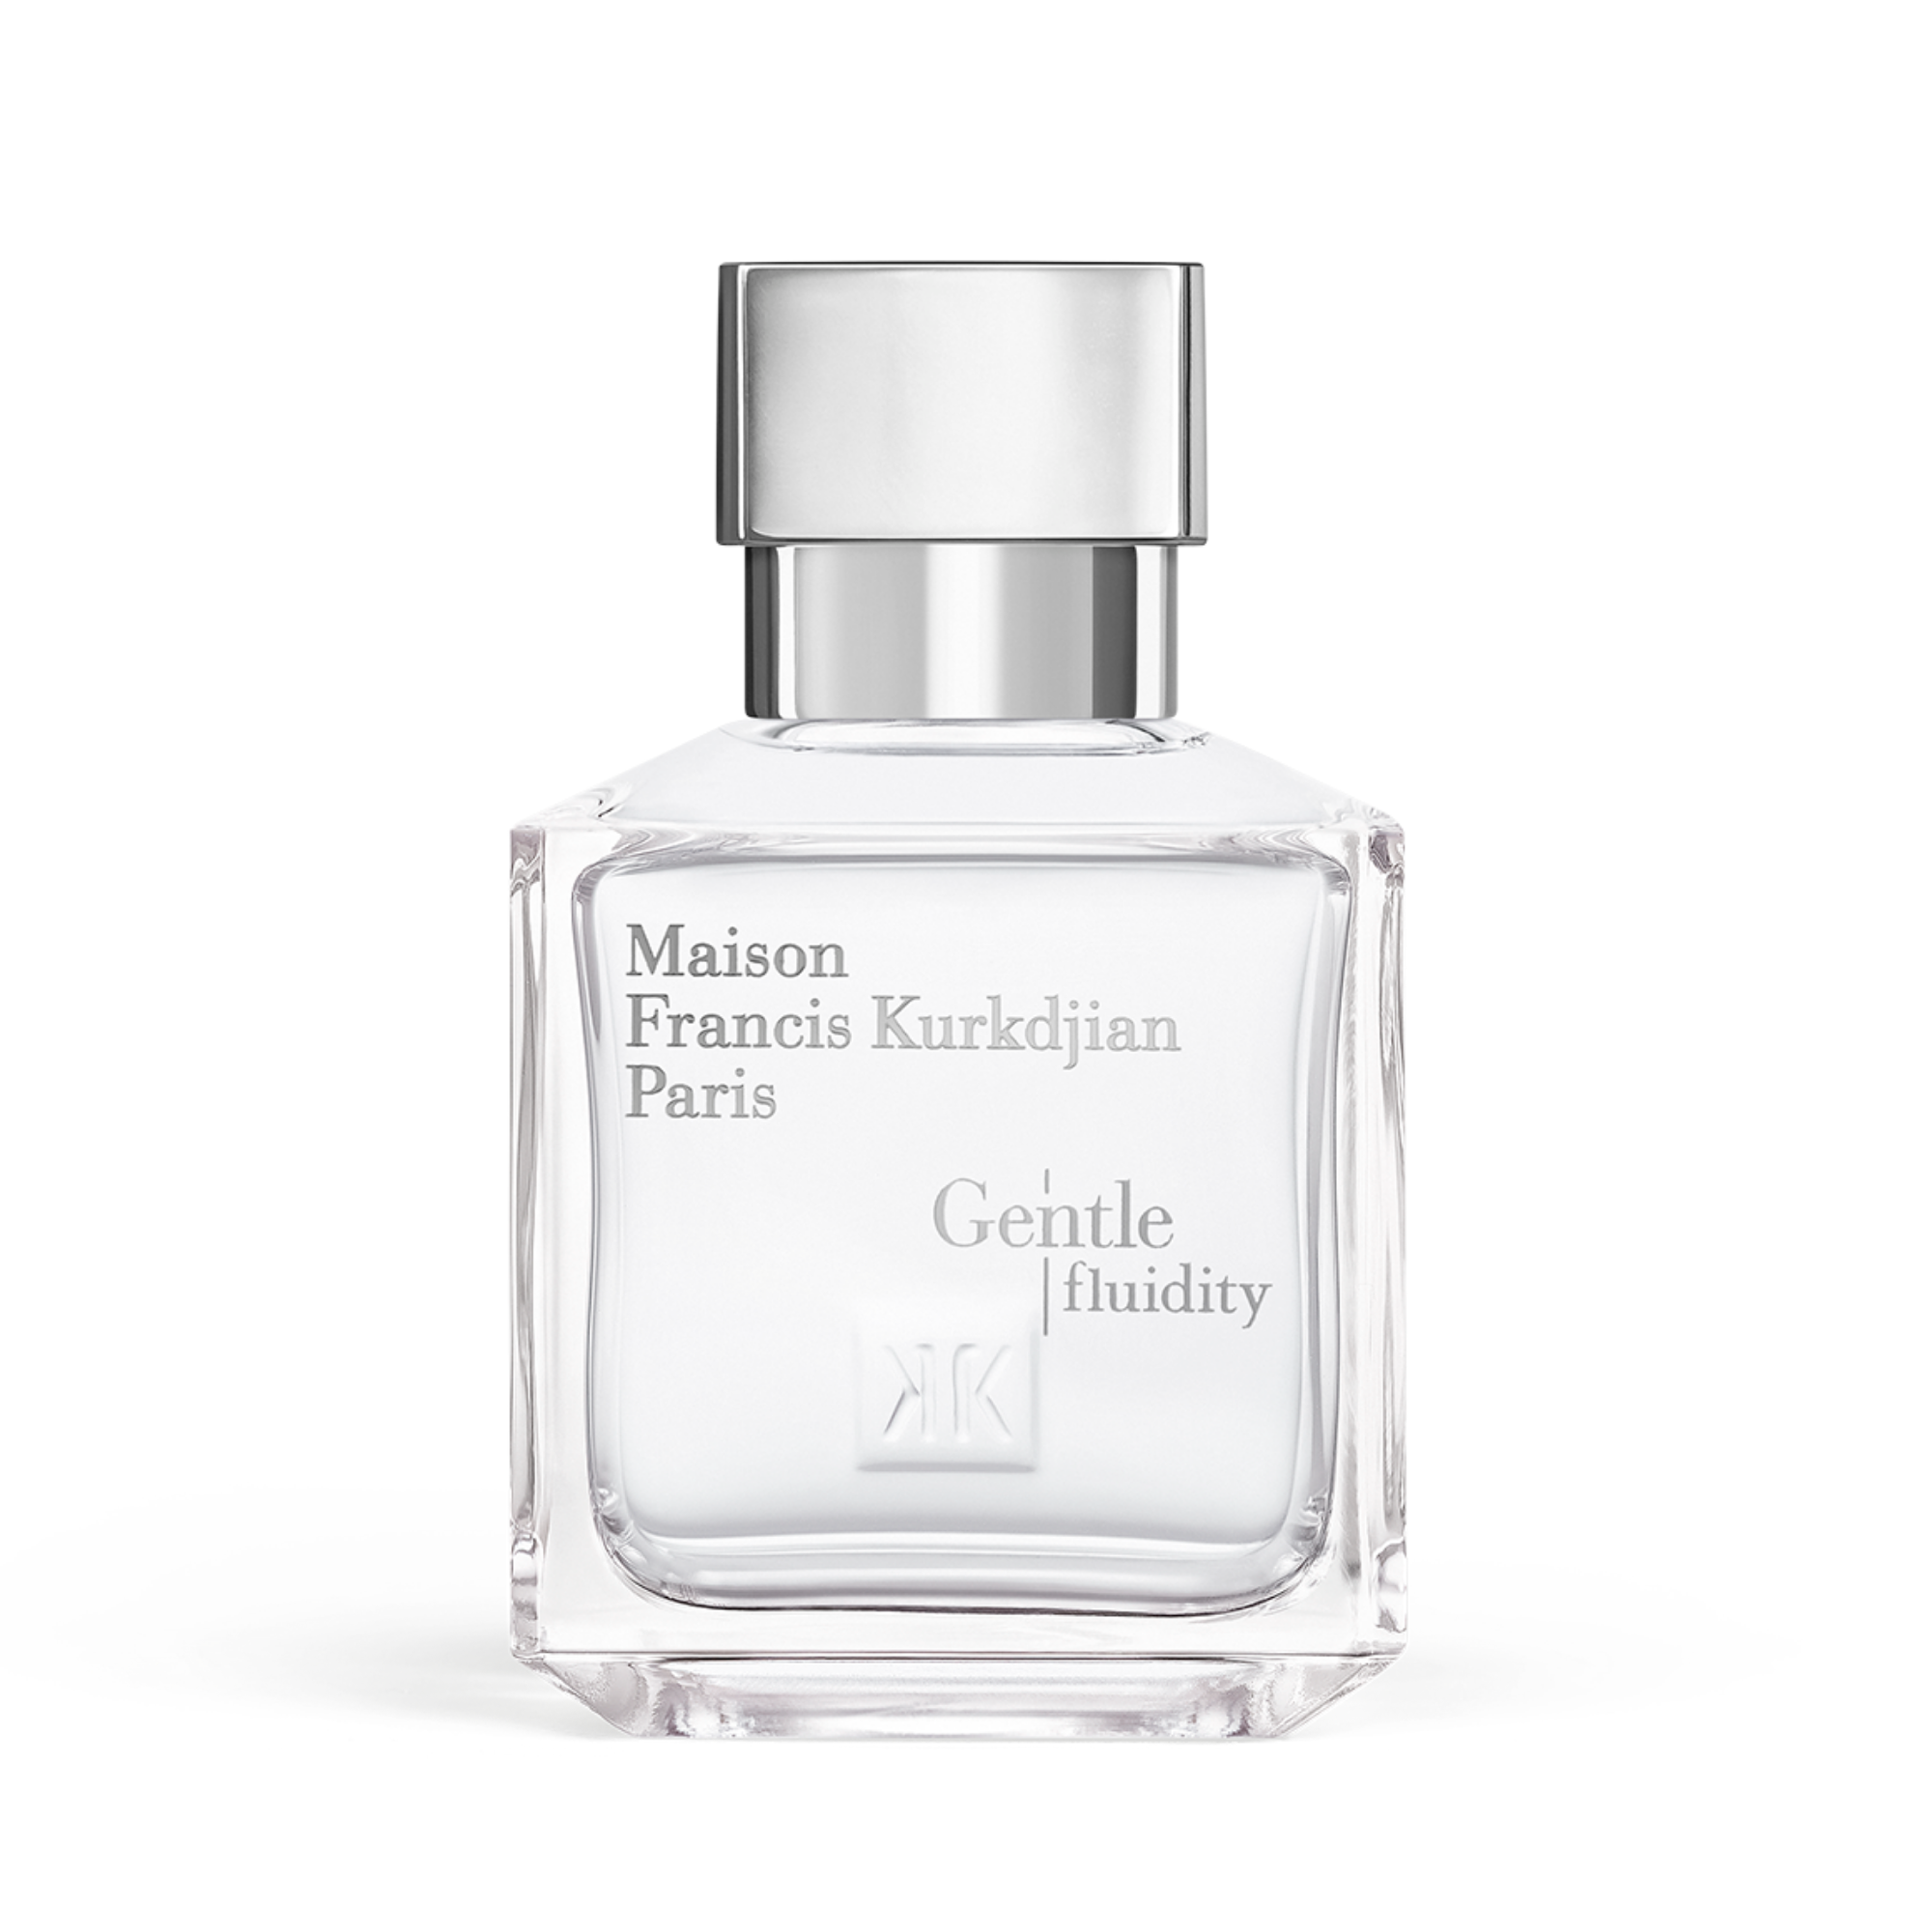 Maison Francis Kurkdjian Ciel de Gum EDP Perfume Review – EauMG